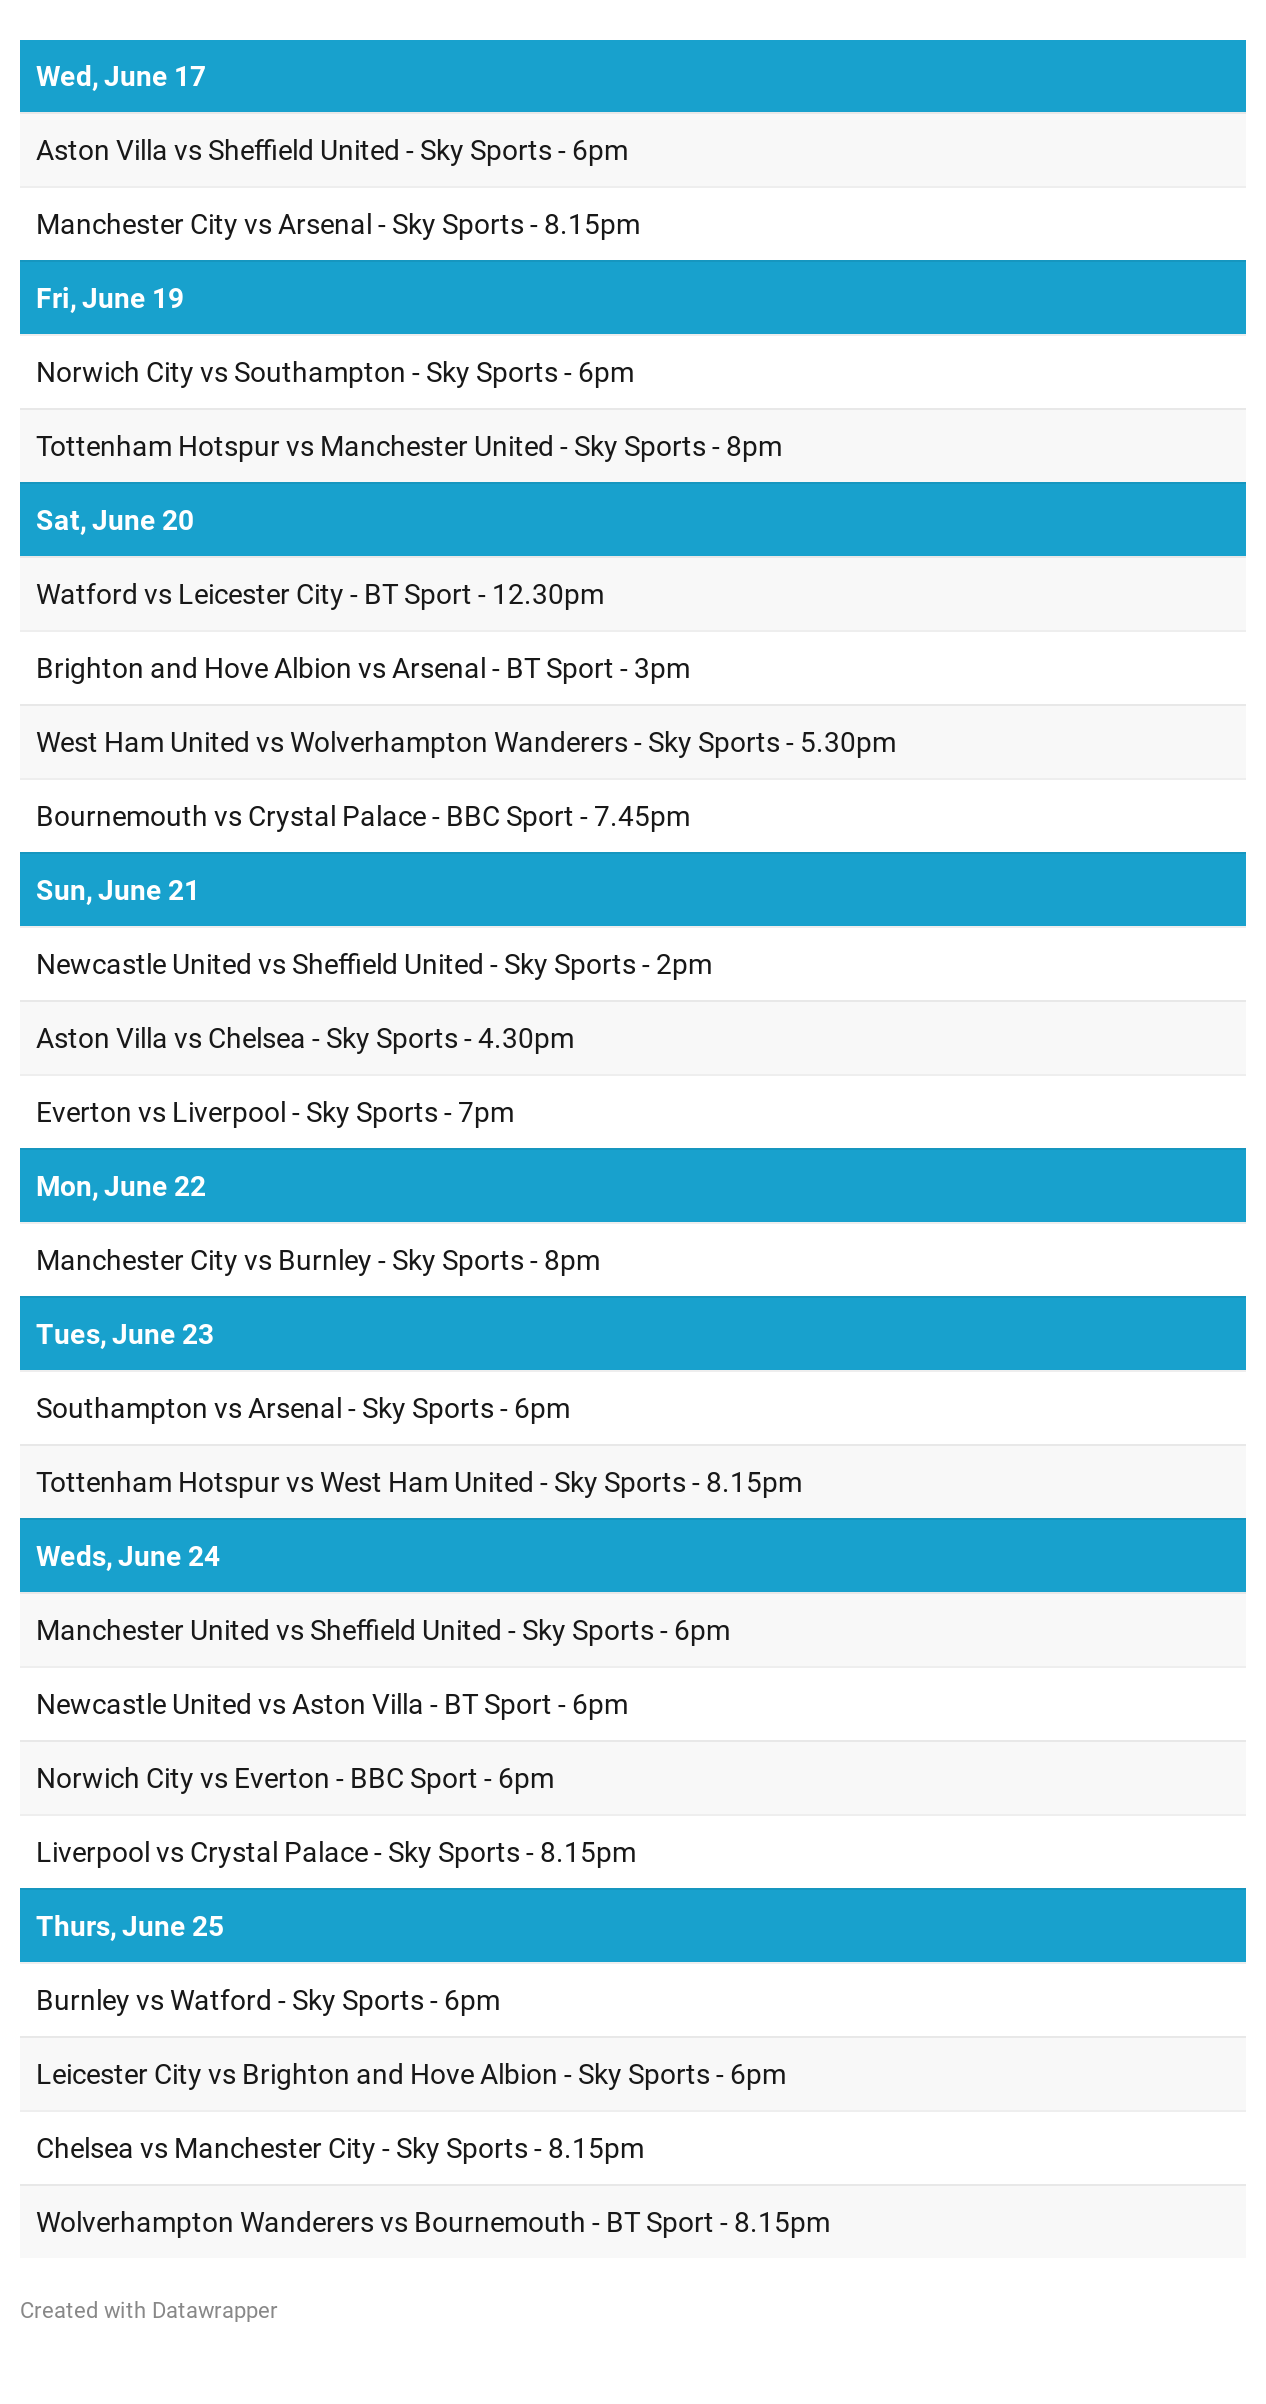 Premier League Live TV schedule first three weeks